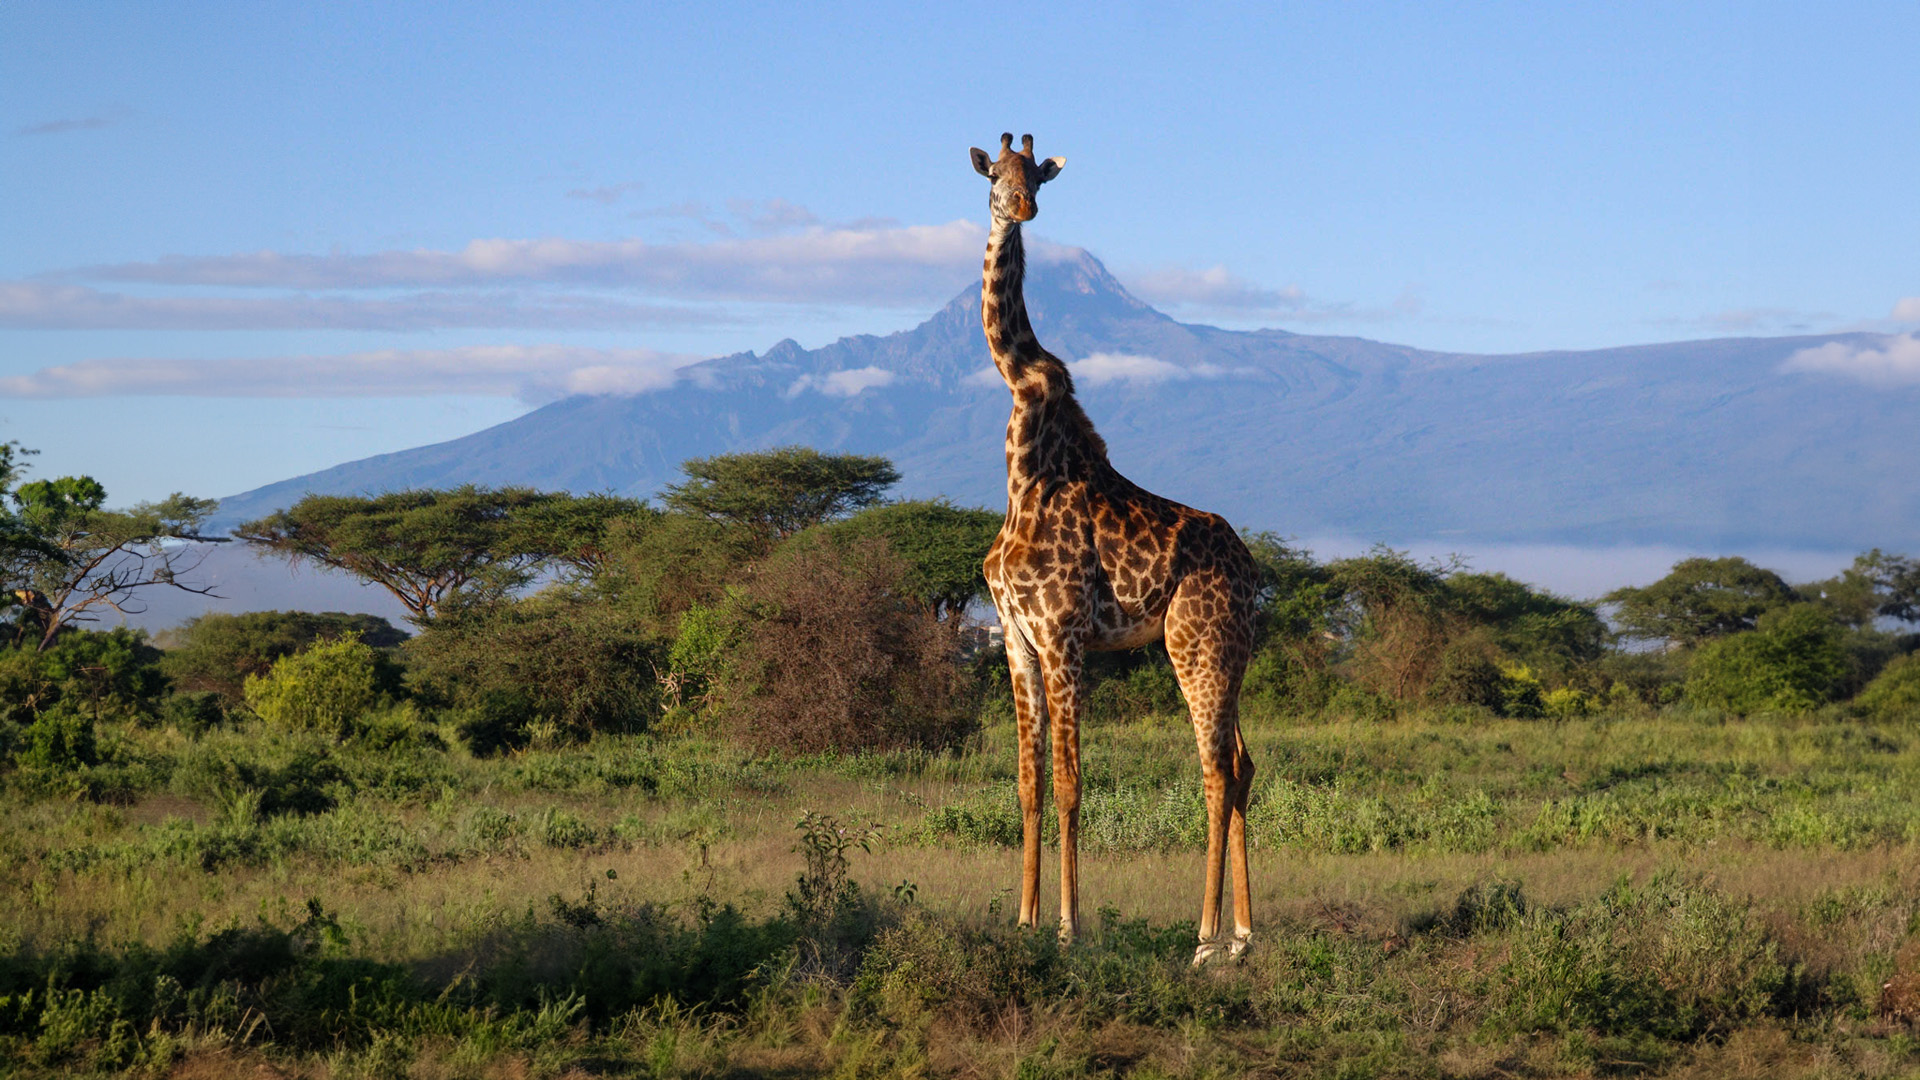 Above: One of Amboseli's more unique inhabitants 